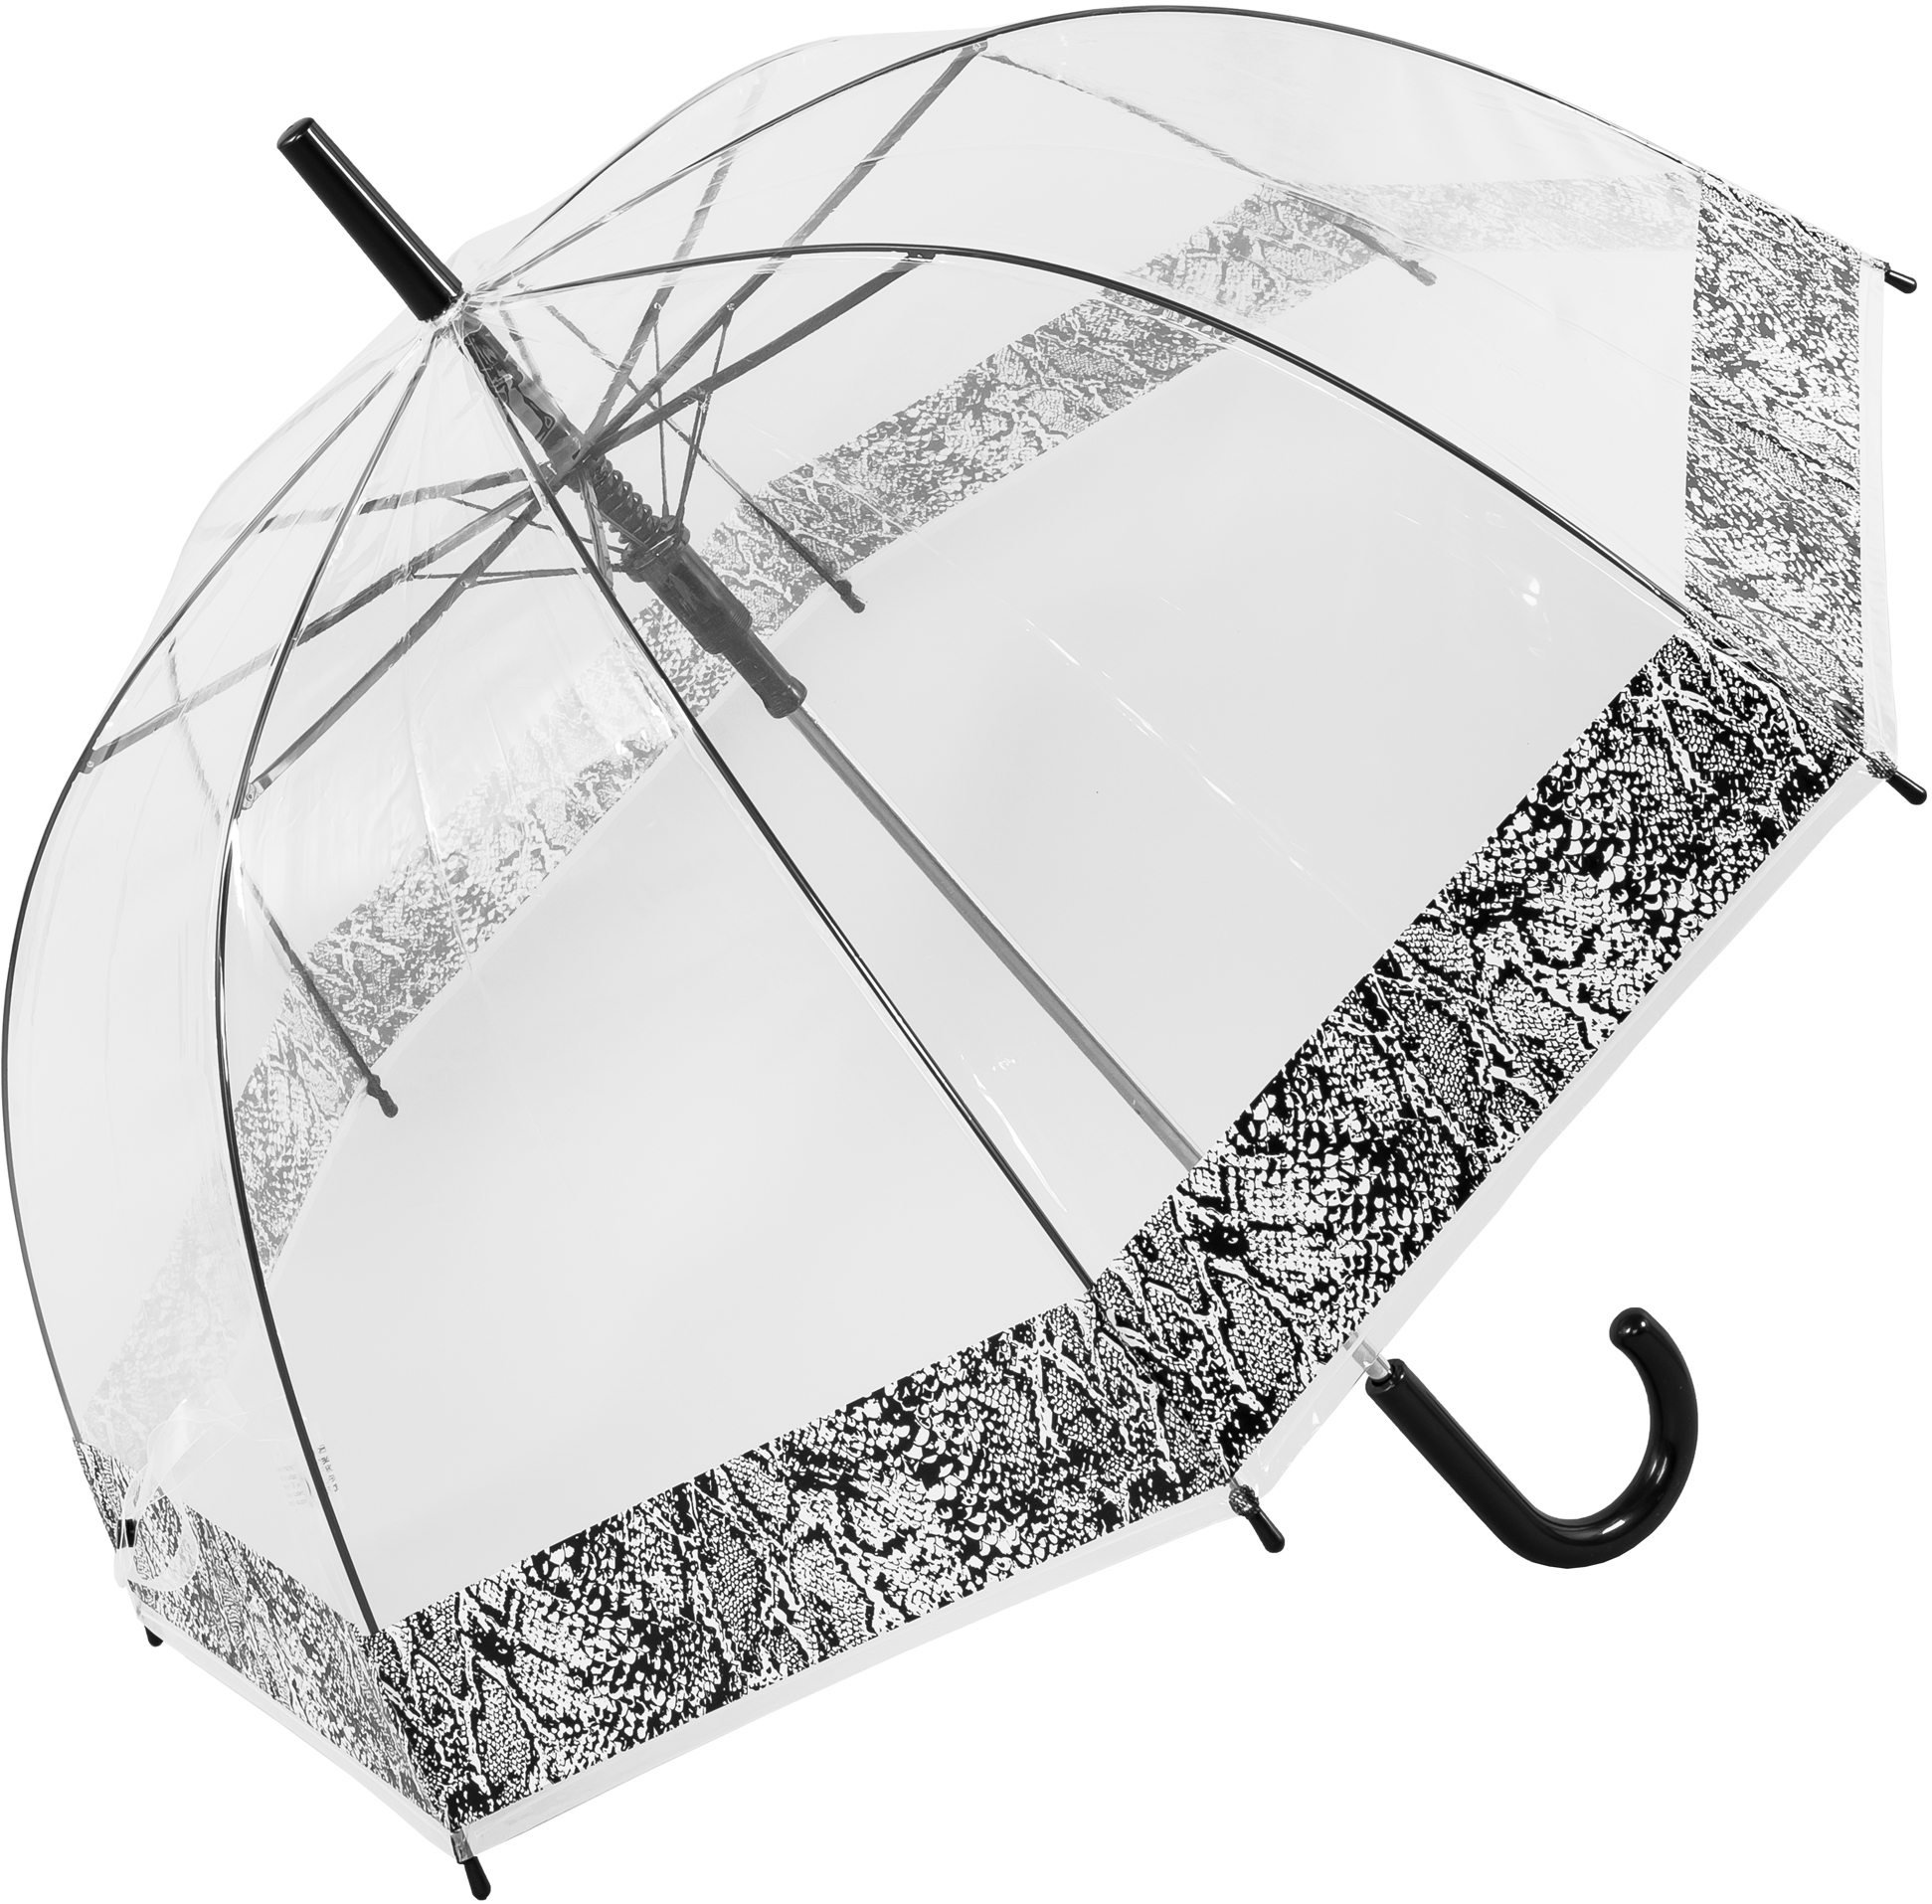 Auto Snakeskin Bordered Clear Umbrella (18012)